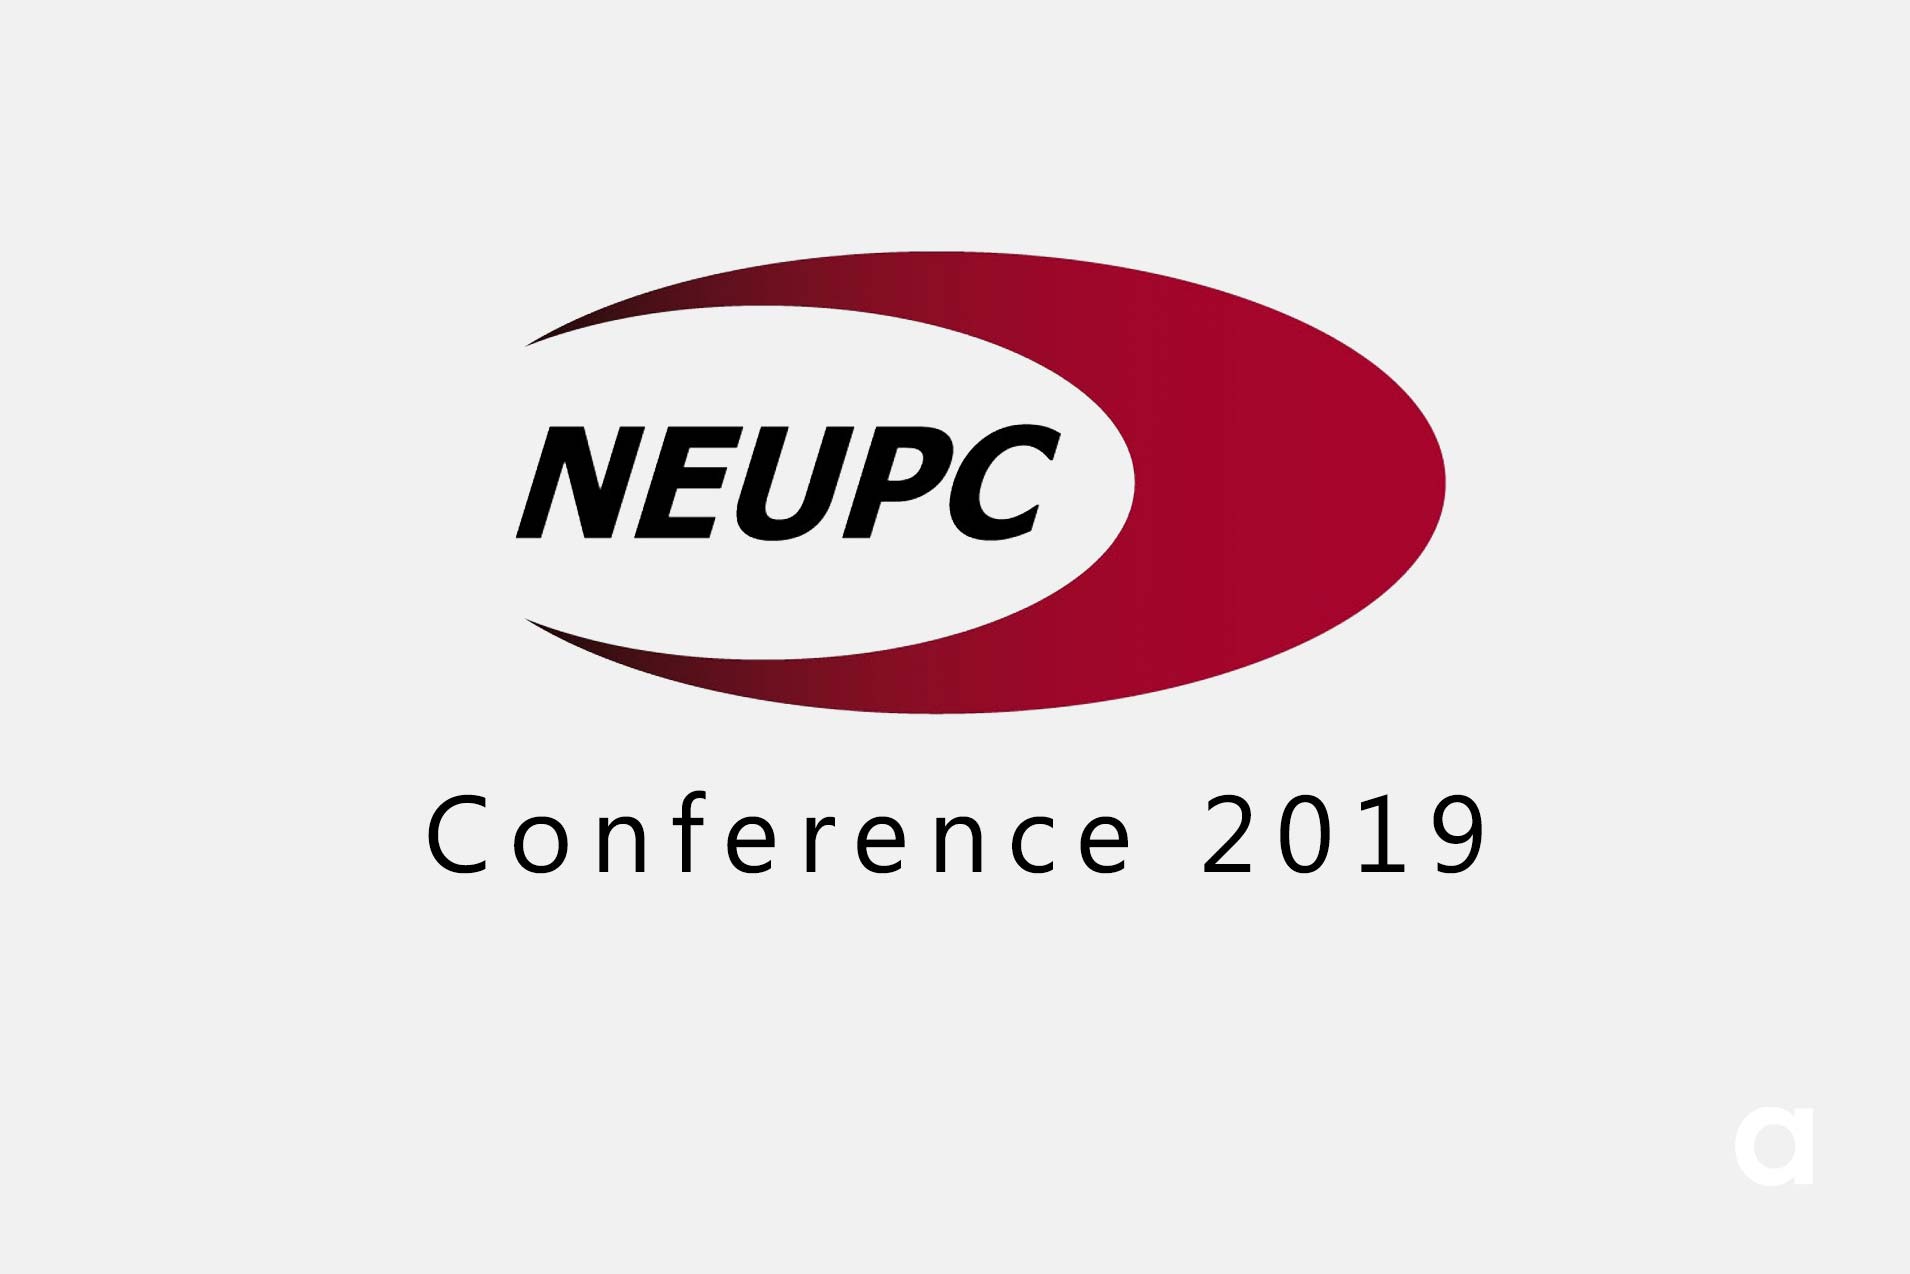 NEUPC Conference